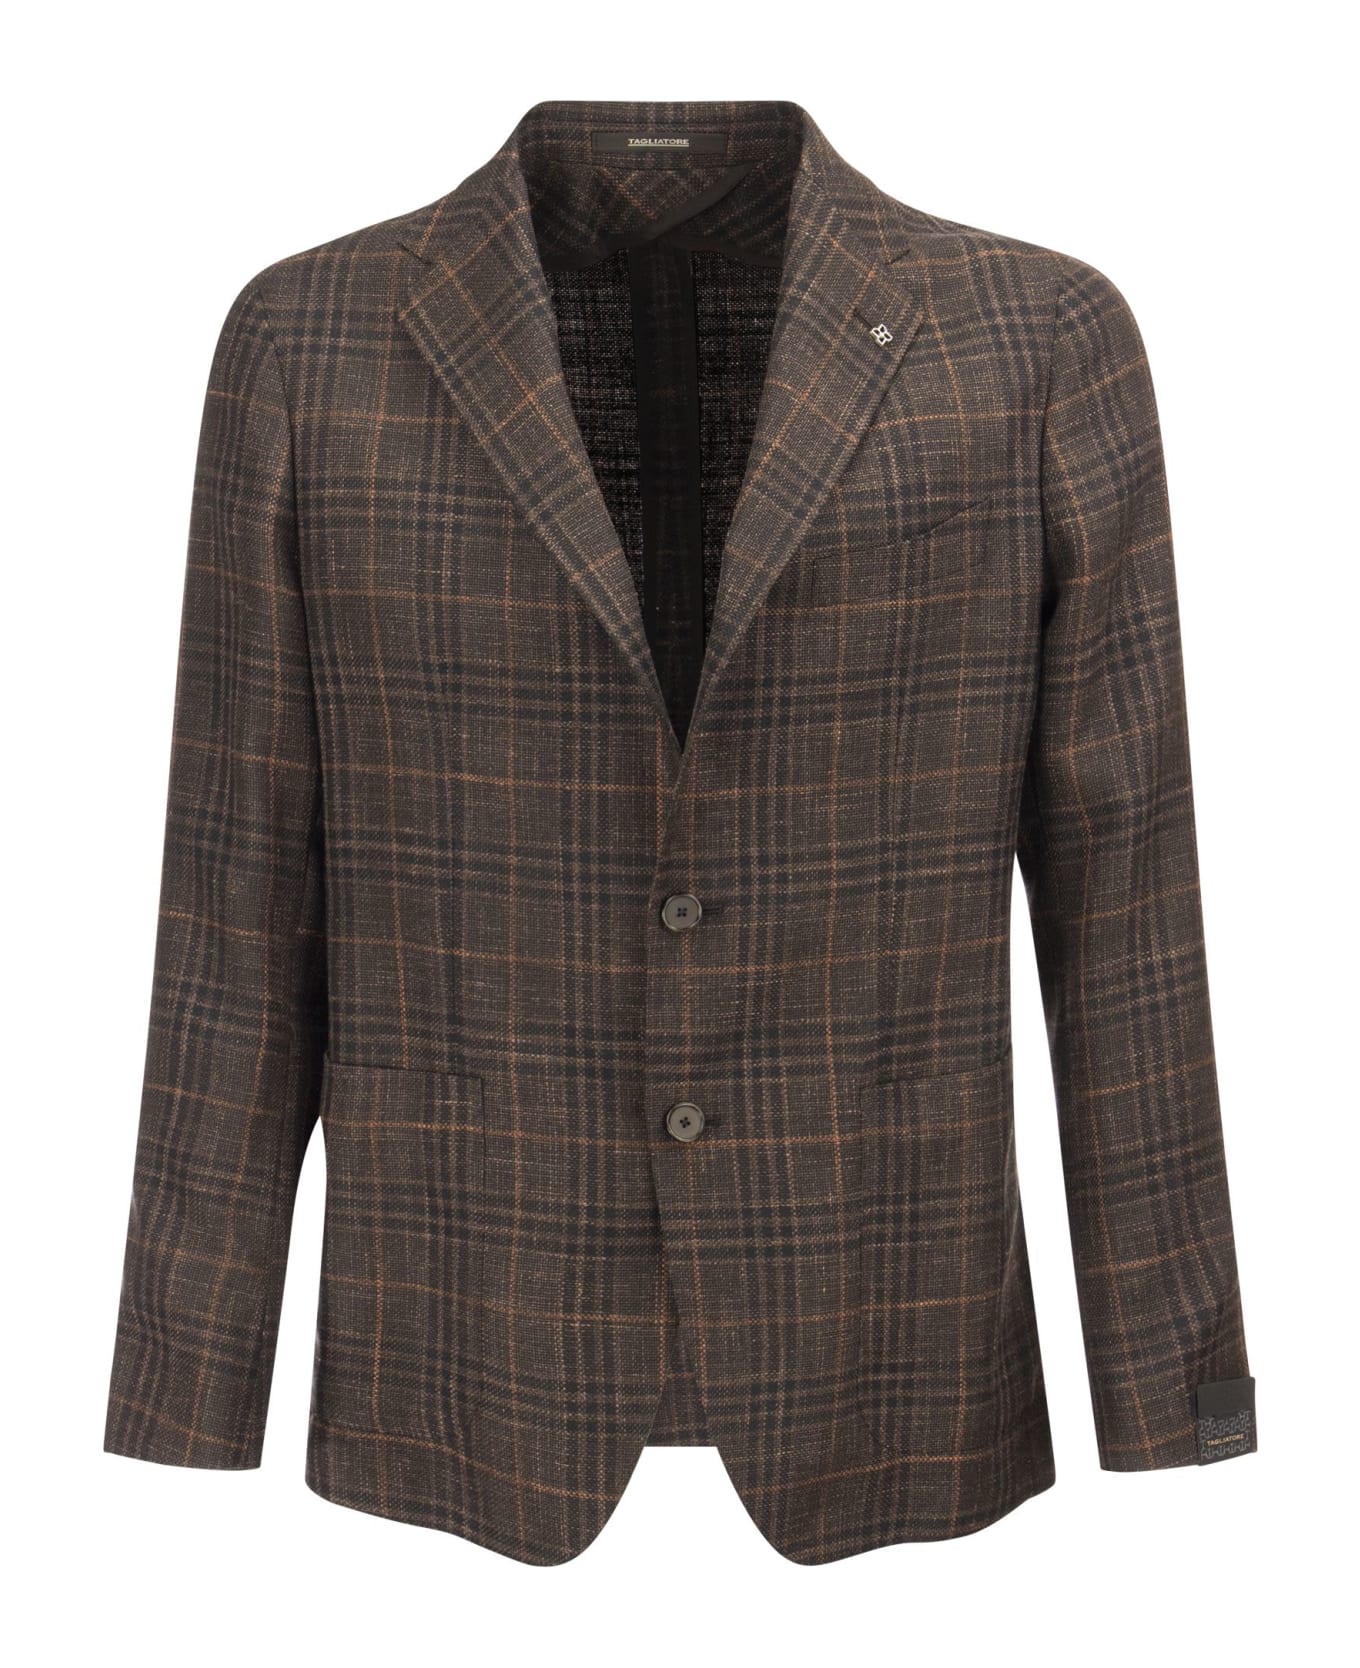 Tagliatore Wool, Silk And Linen Jacket With Tartan Pattern - Dark Brown